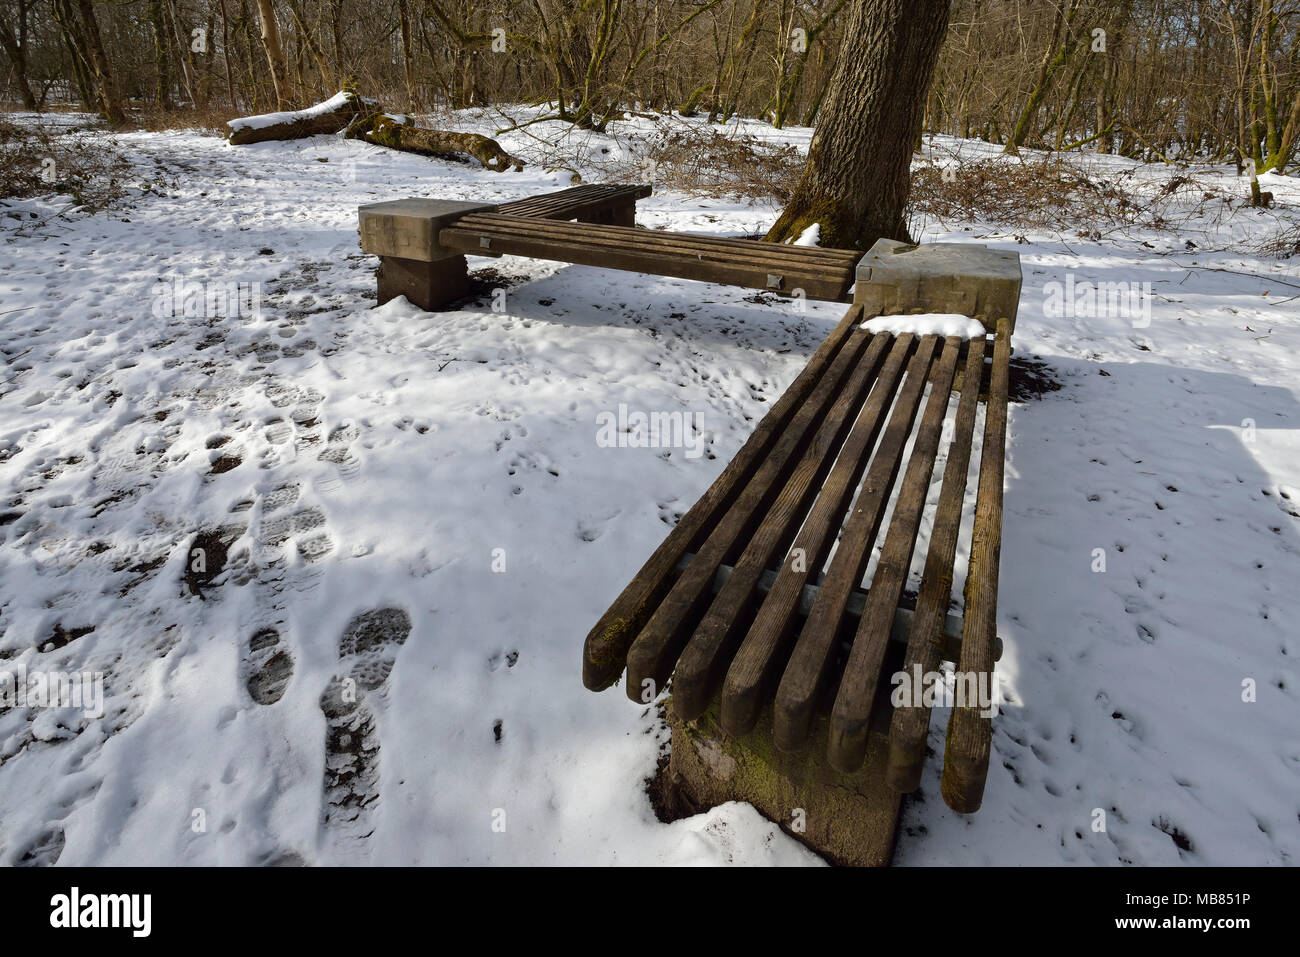 Woodland Seat in Snow, Charterhouse, Mendip Hills Stock Photo